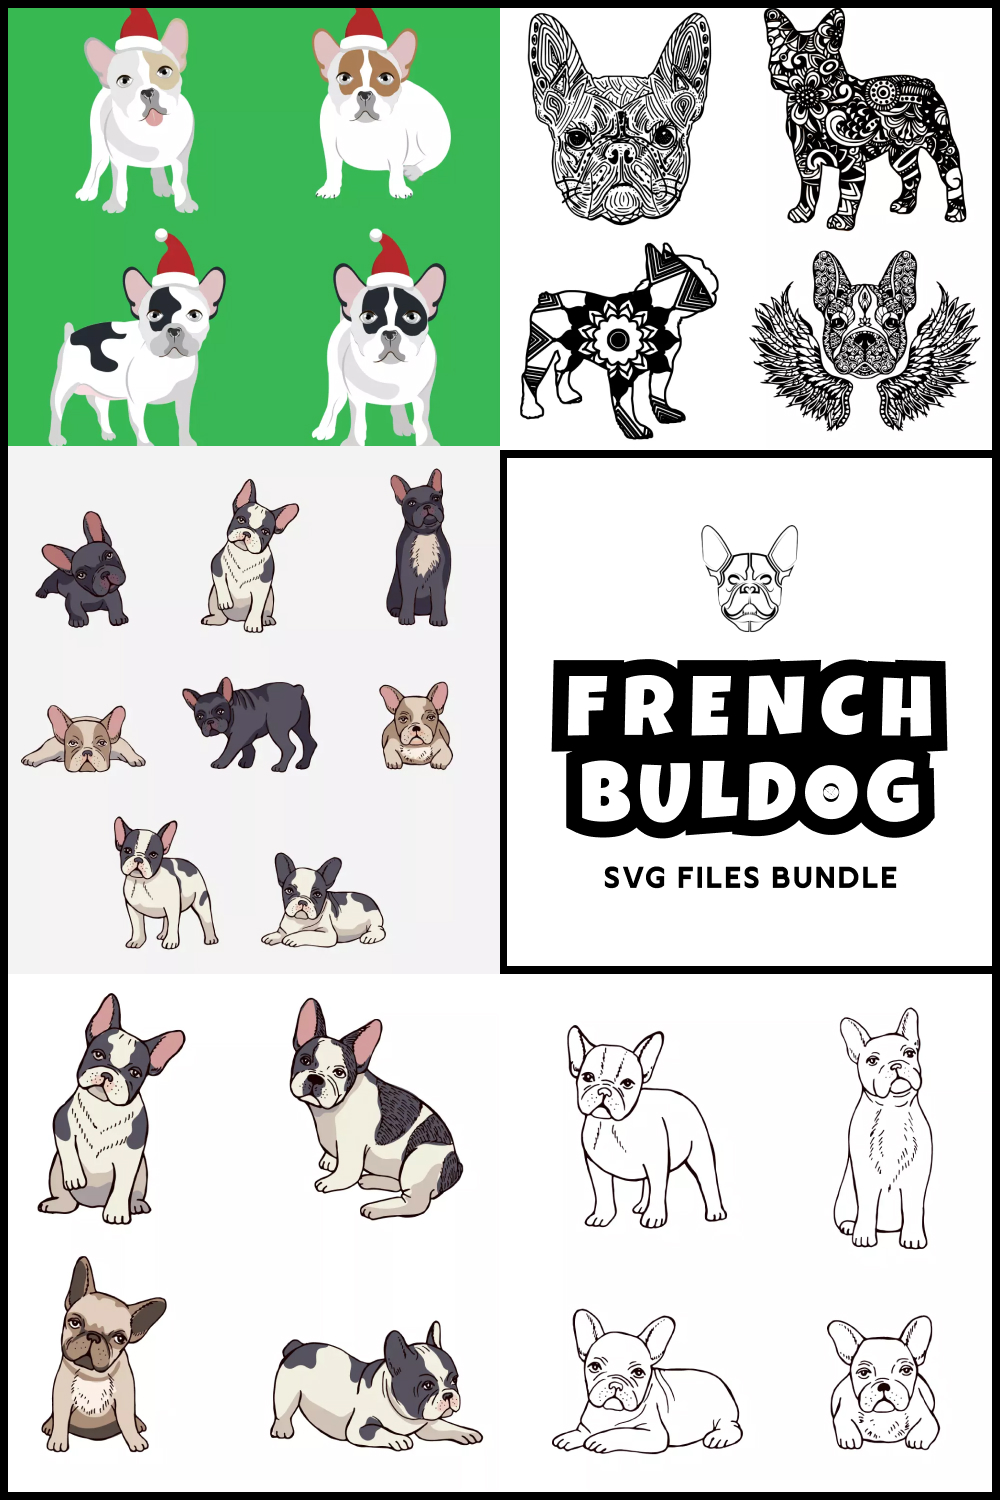 French bulldog svg files bundle.